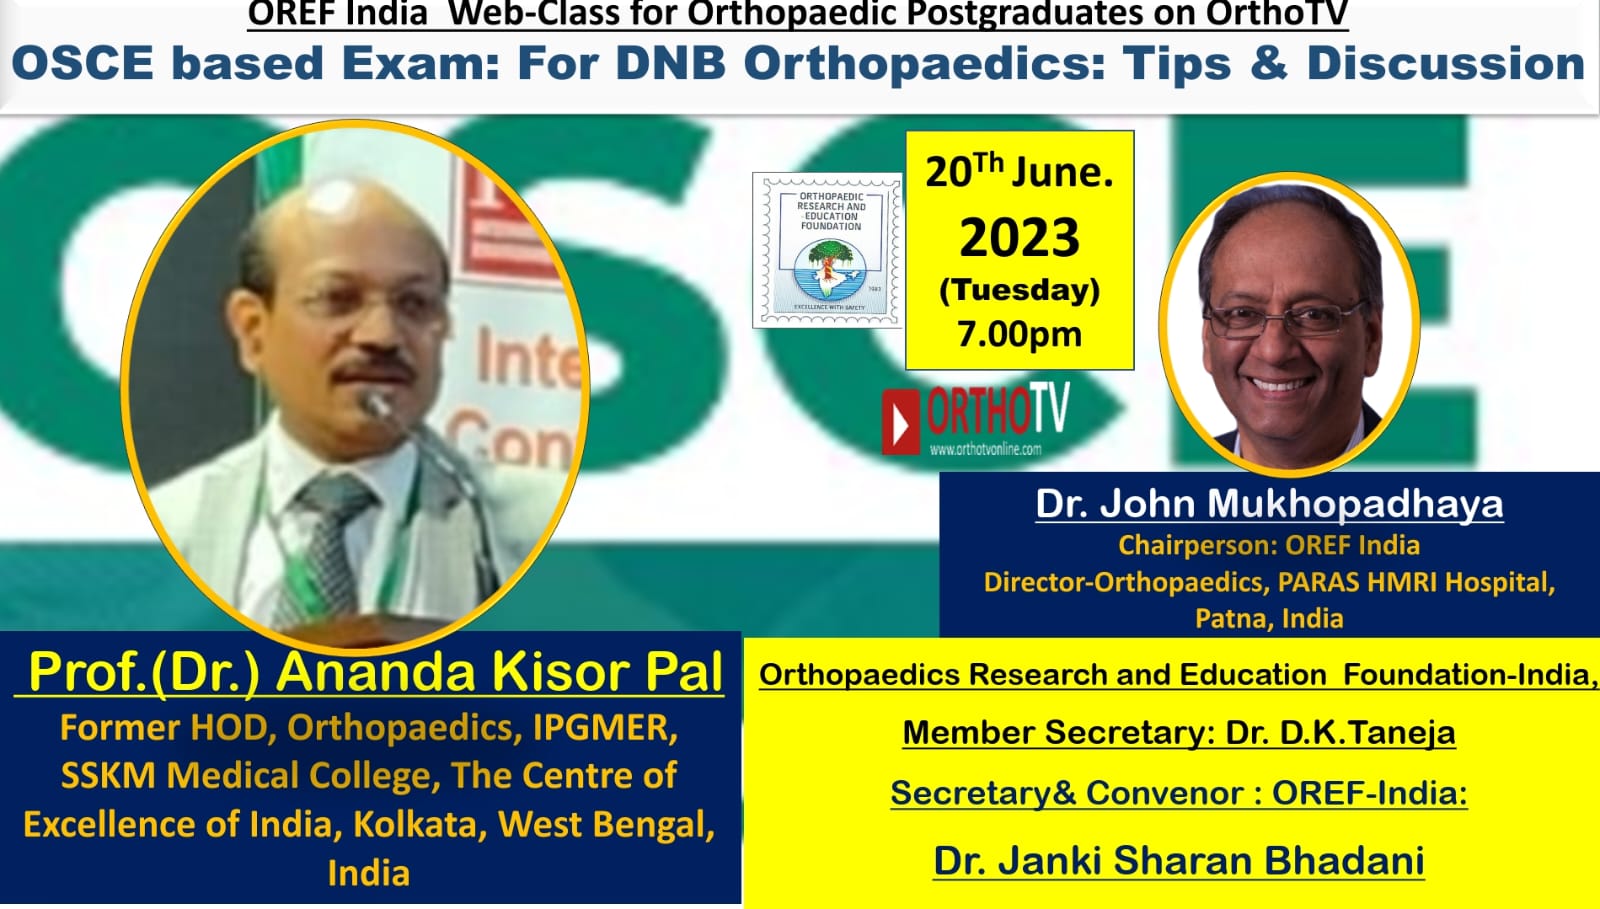 OREF Web-class for Orthopaedic Postgraduates on OrthoTV - OSCE based Exam : For DNB Orthopaedics: Tips & Discussion - Prof.(Dr.) Ananda Kisor Pal